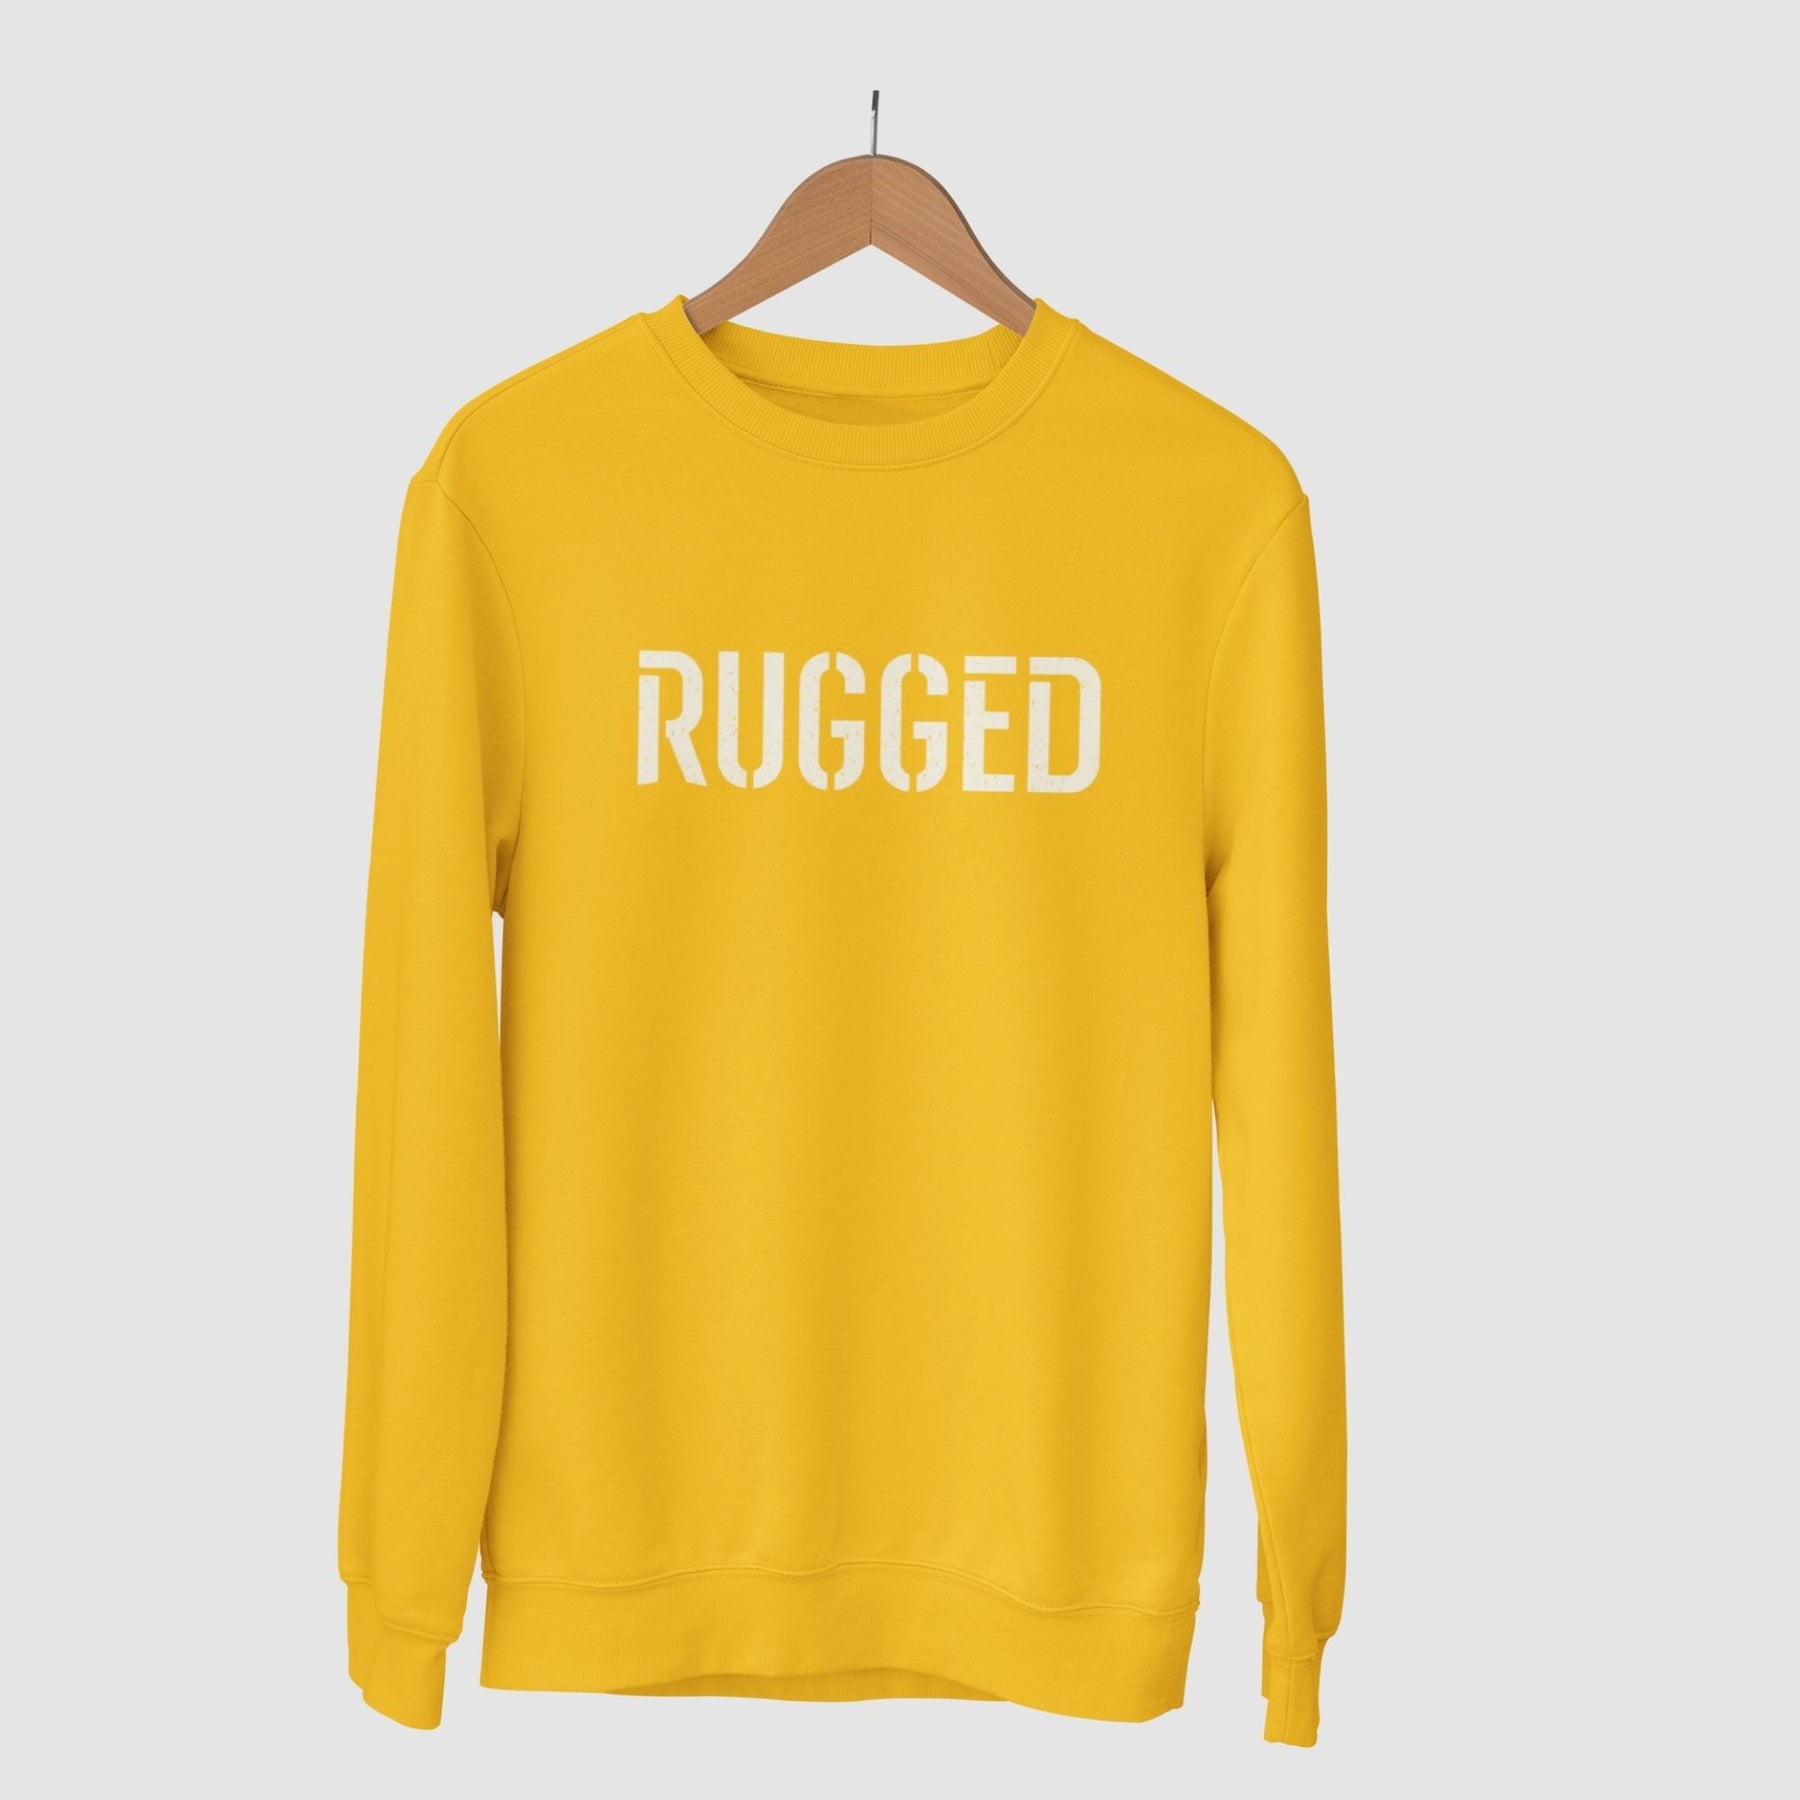 rugged-cotton-printed-unisex-golden-yellow-sweatshirt-gogirgit-com